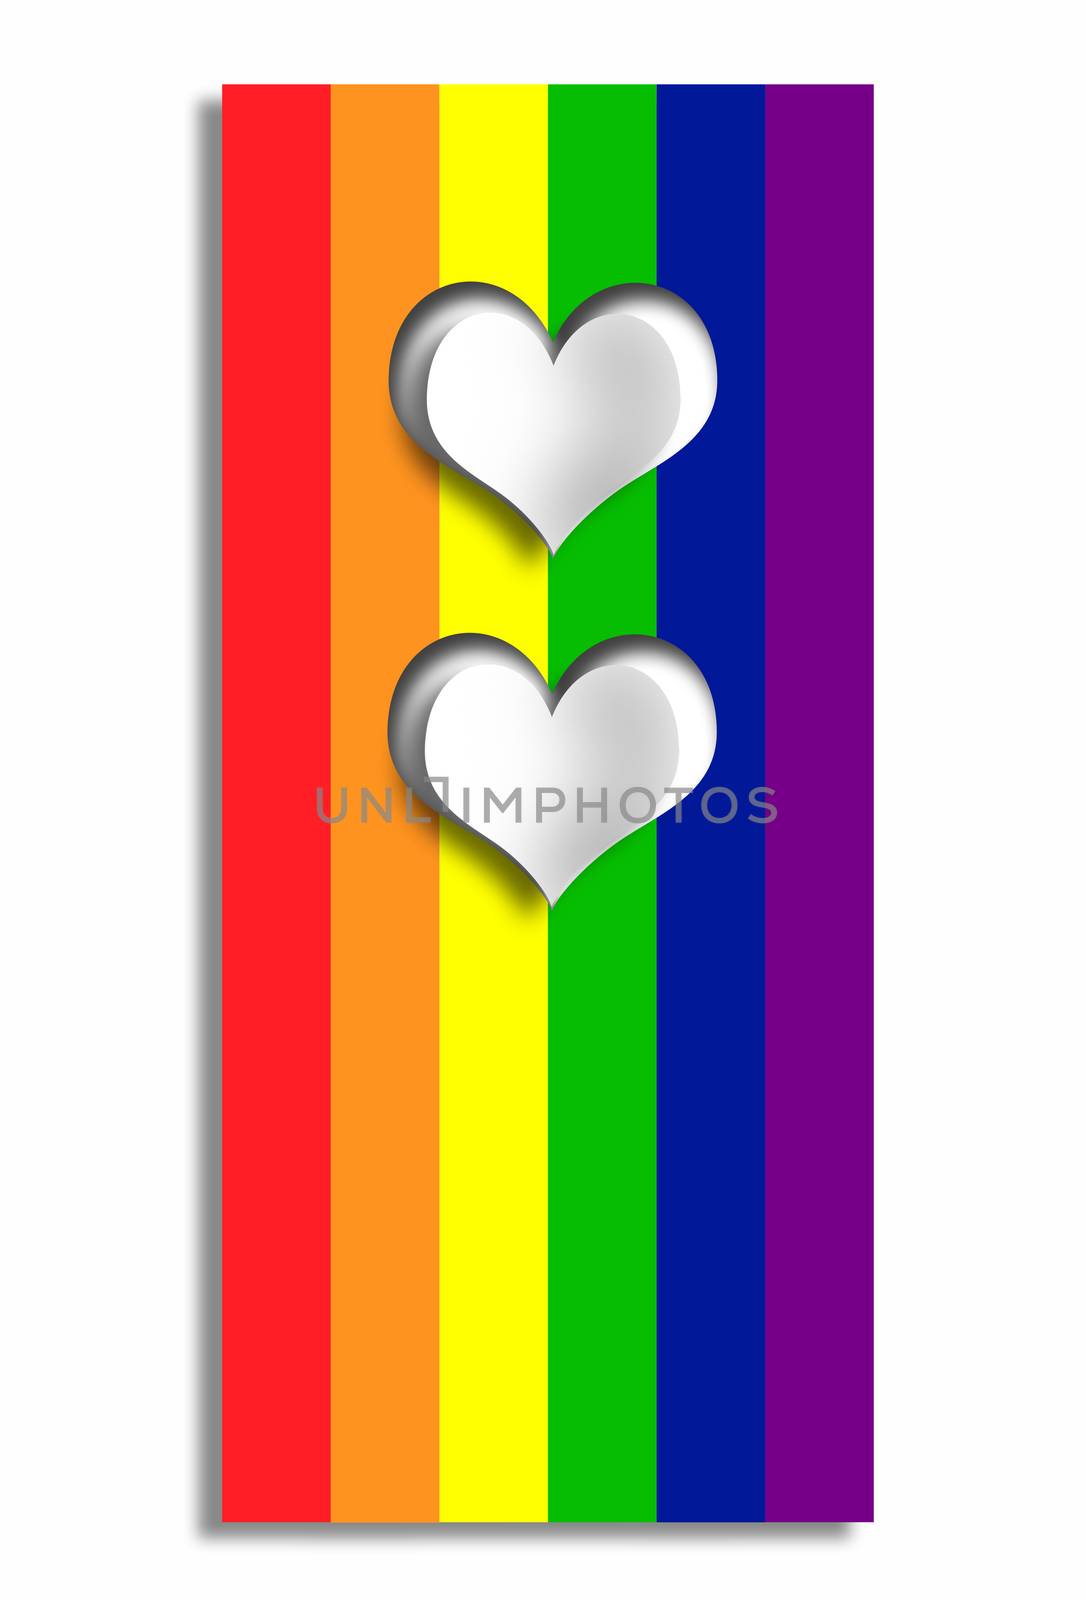 White hearts on rainbow color LGBT flag. LGBT pride symbol. 3D illustration. Vertical